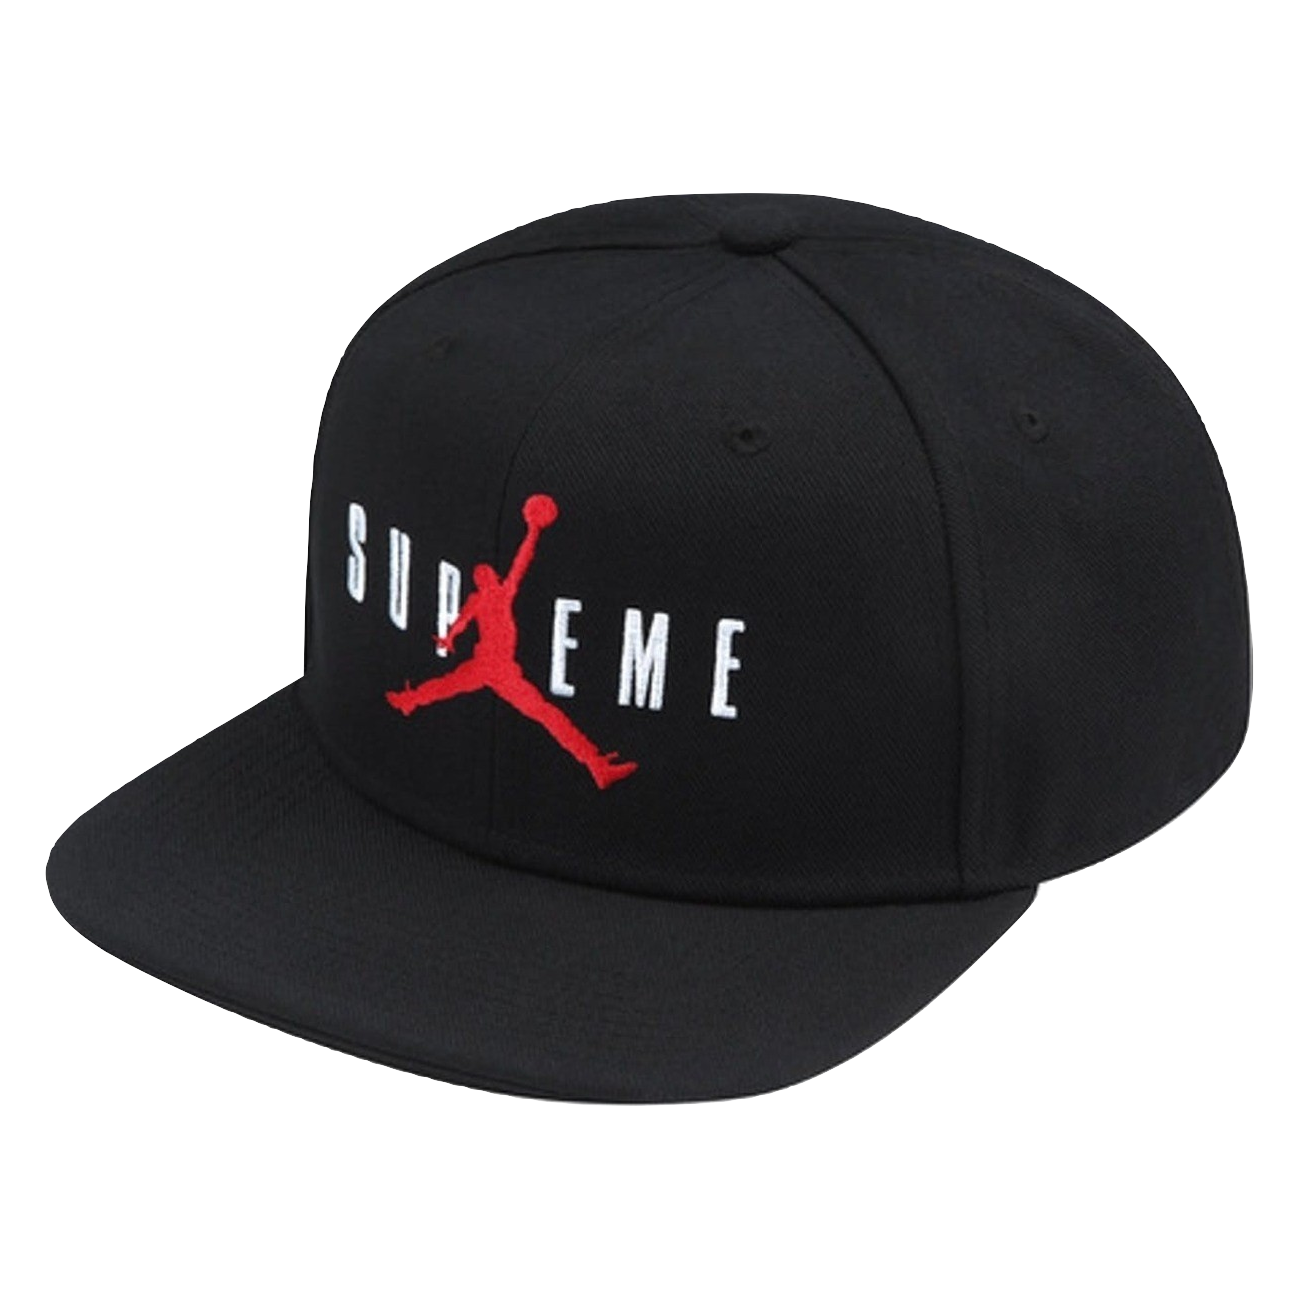 Supreme x Jordan 6 Panel Hat - Black